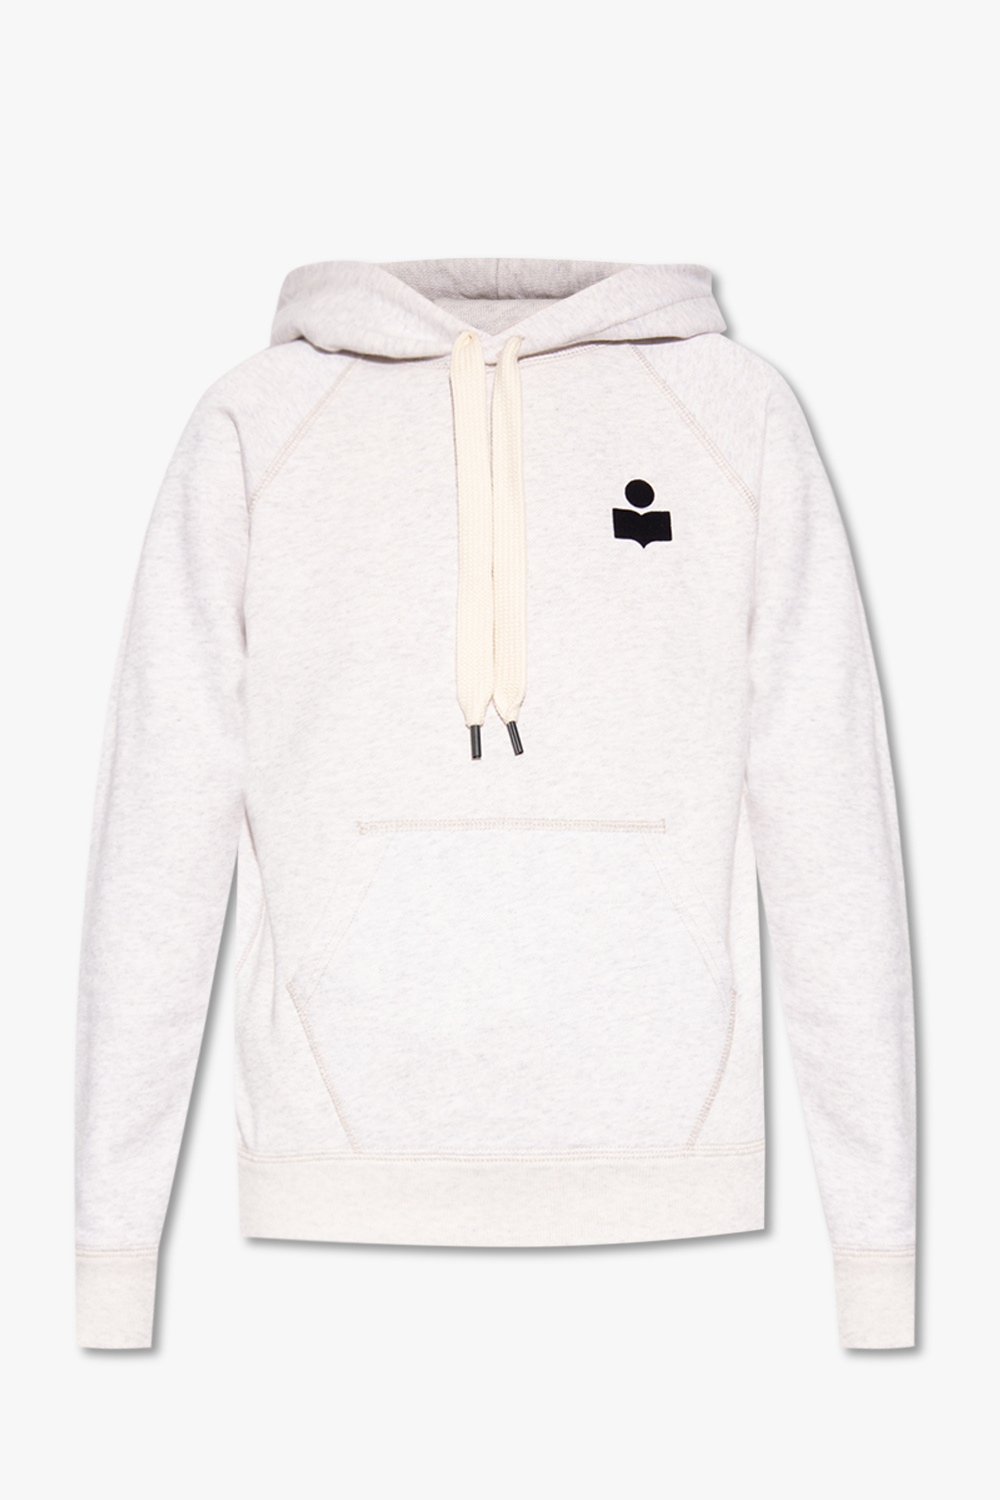 Marant Etoile ‘Malibu’ hoodie